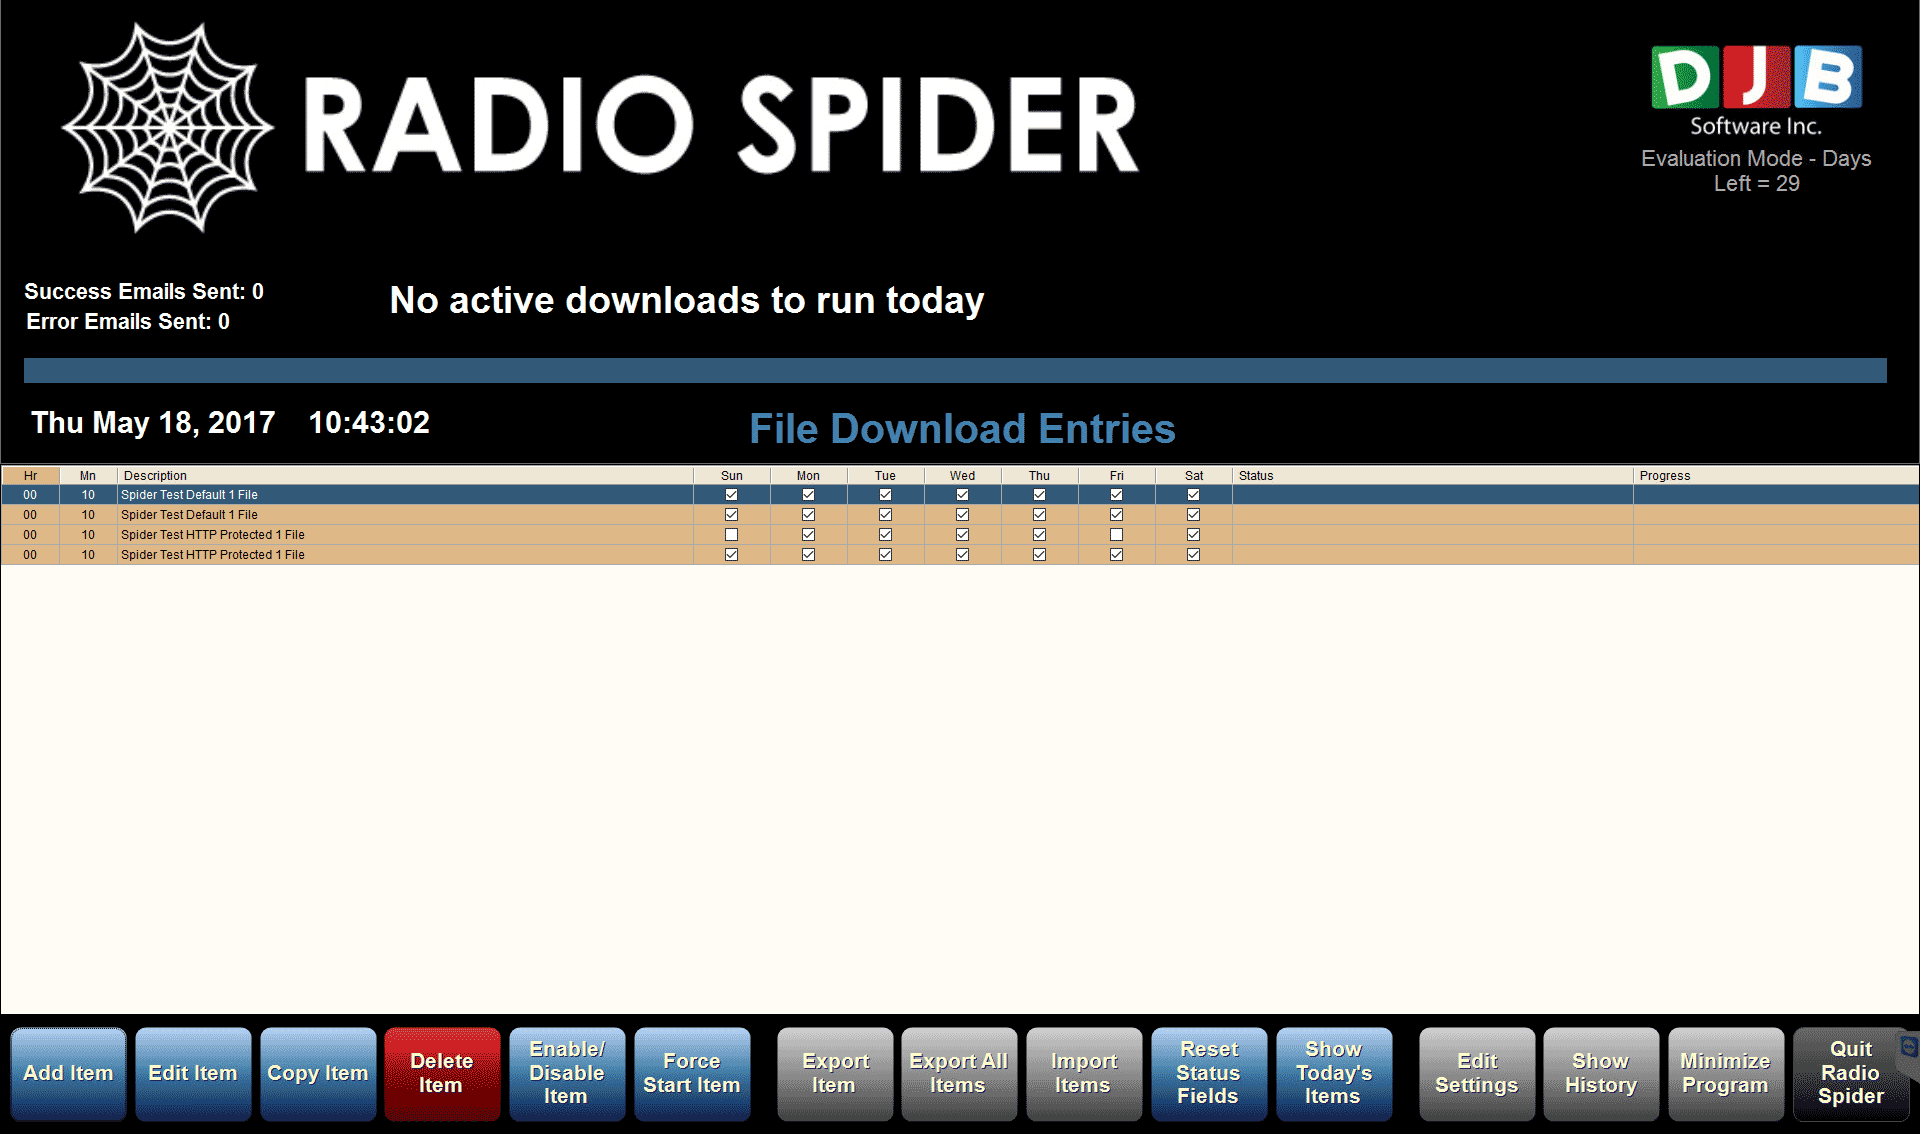 djb-radio-spider-automated-web-programming-downloader-1920w.png